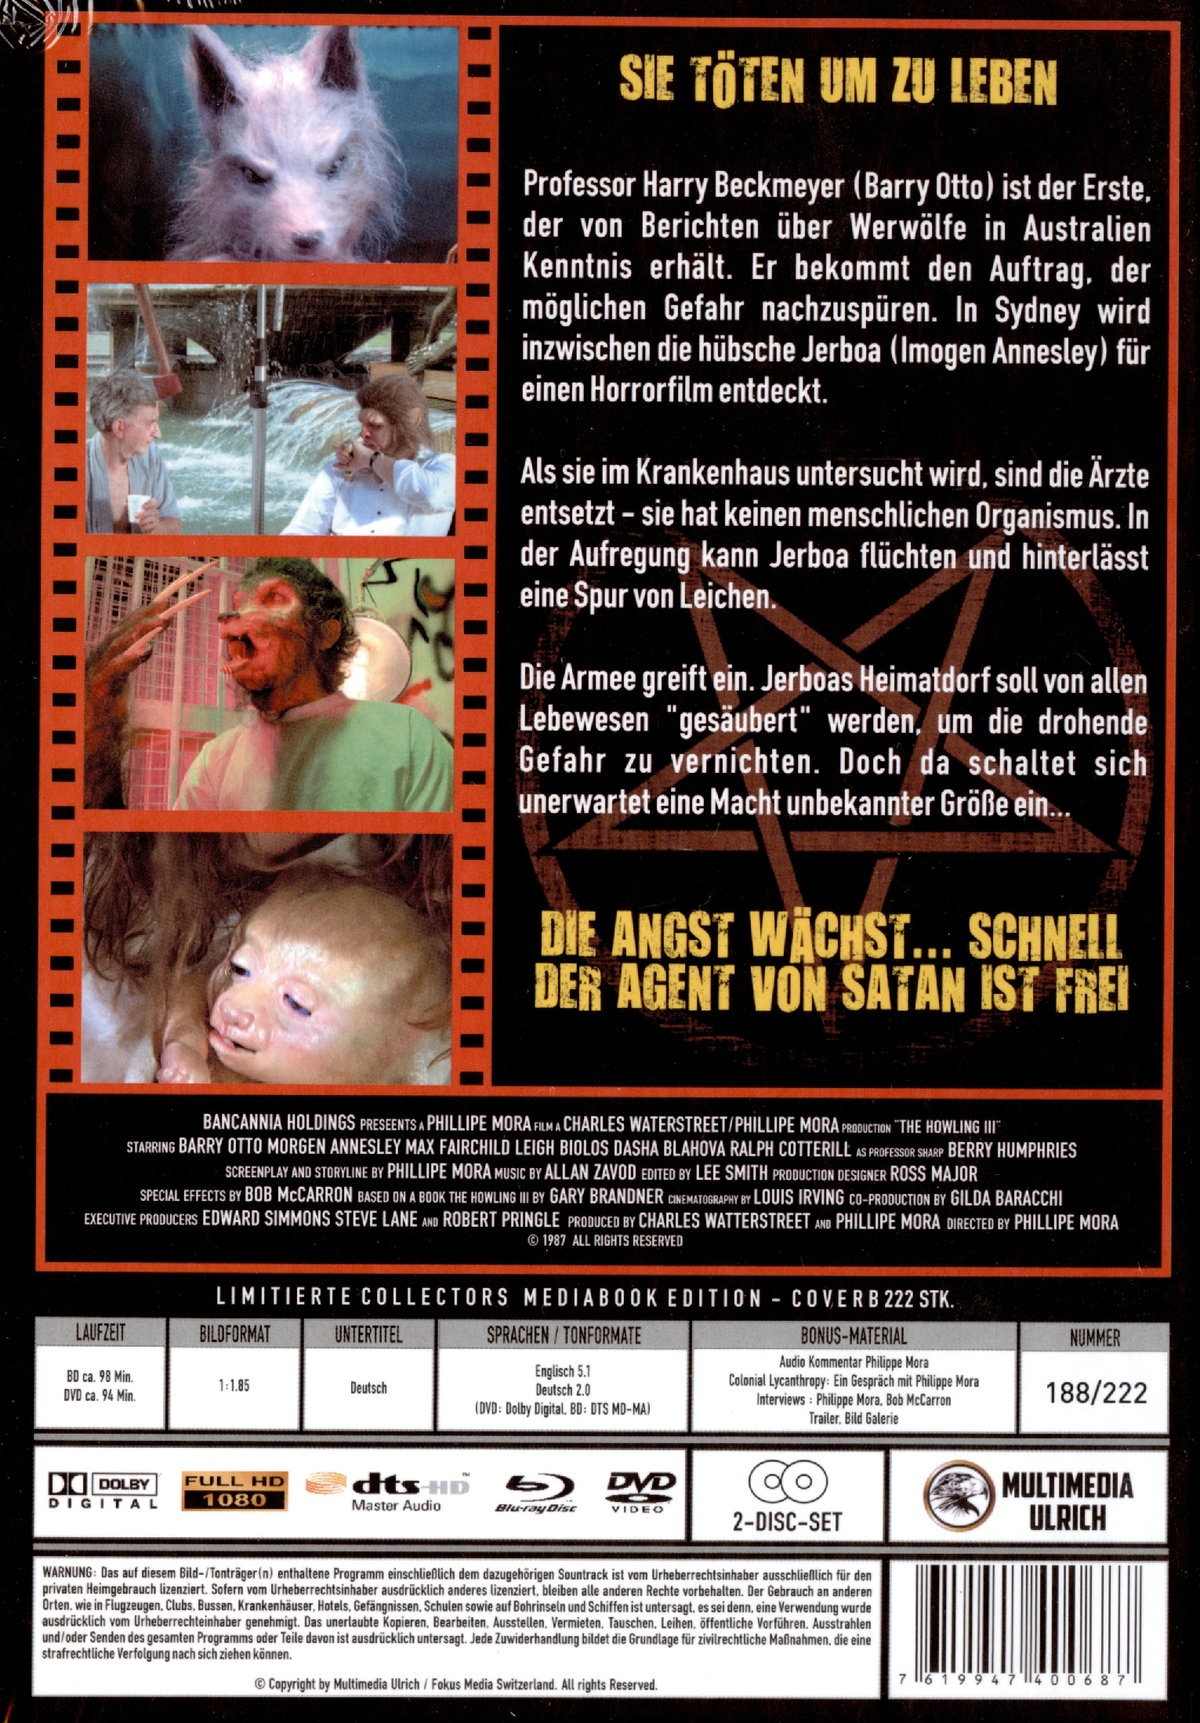 Howling 3 - The Marsupials - Uncut Mediabook Edition (DVD+blu-ray) (B)